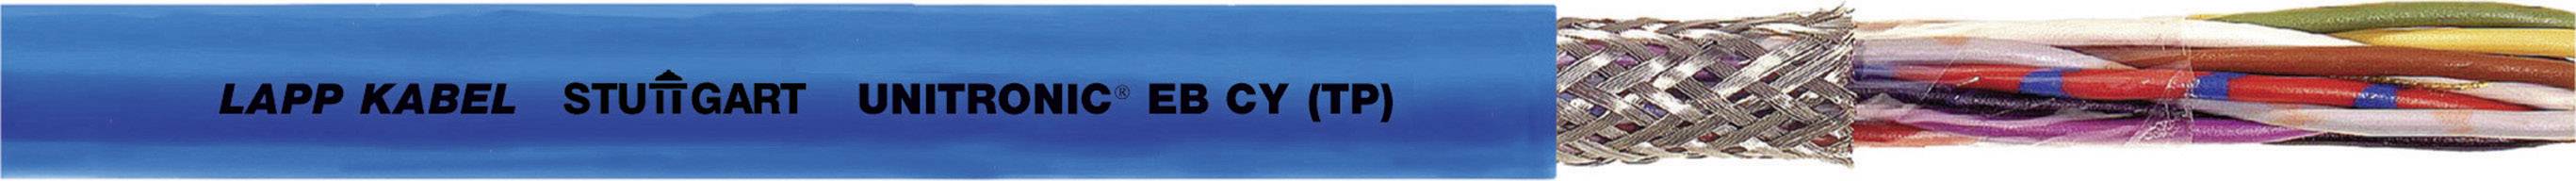 LAPP 12620-1 Datenleitung UNITRONIC EB CY (TP) 2 x 2 x 0.75 mm² Himmelblau Meterware